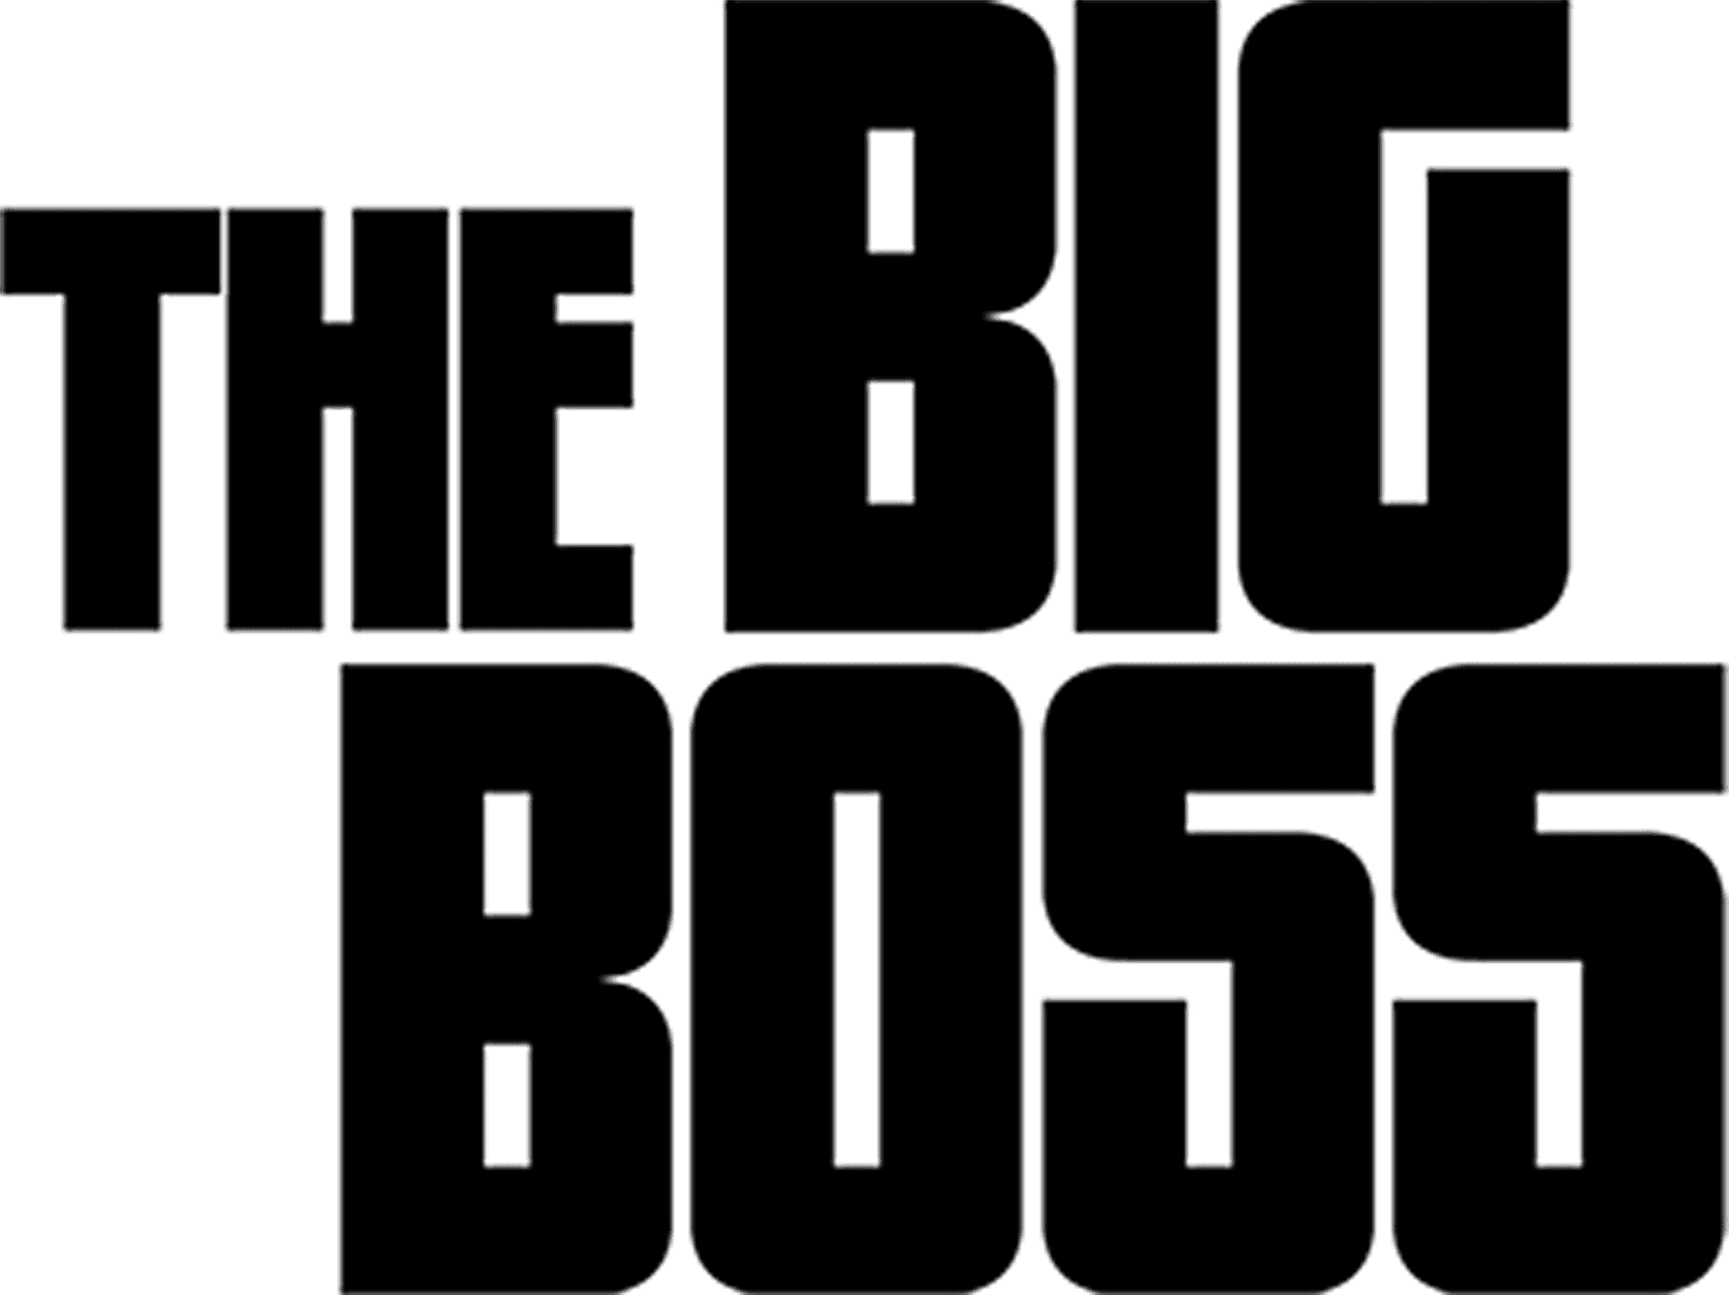 The Big Boss logo